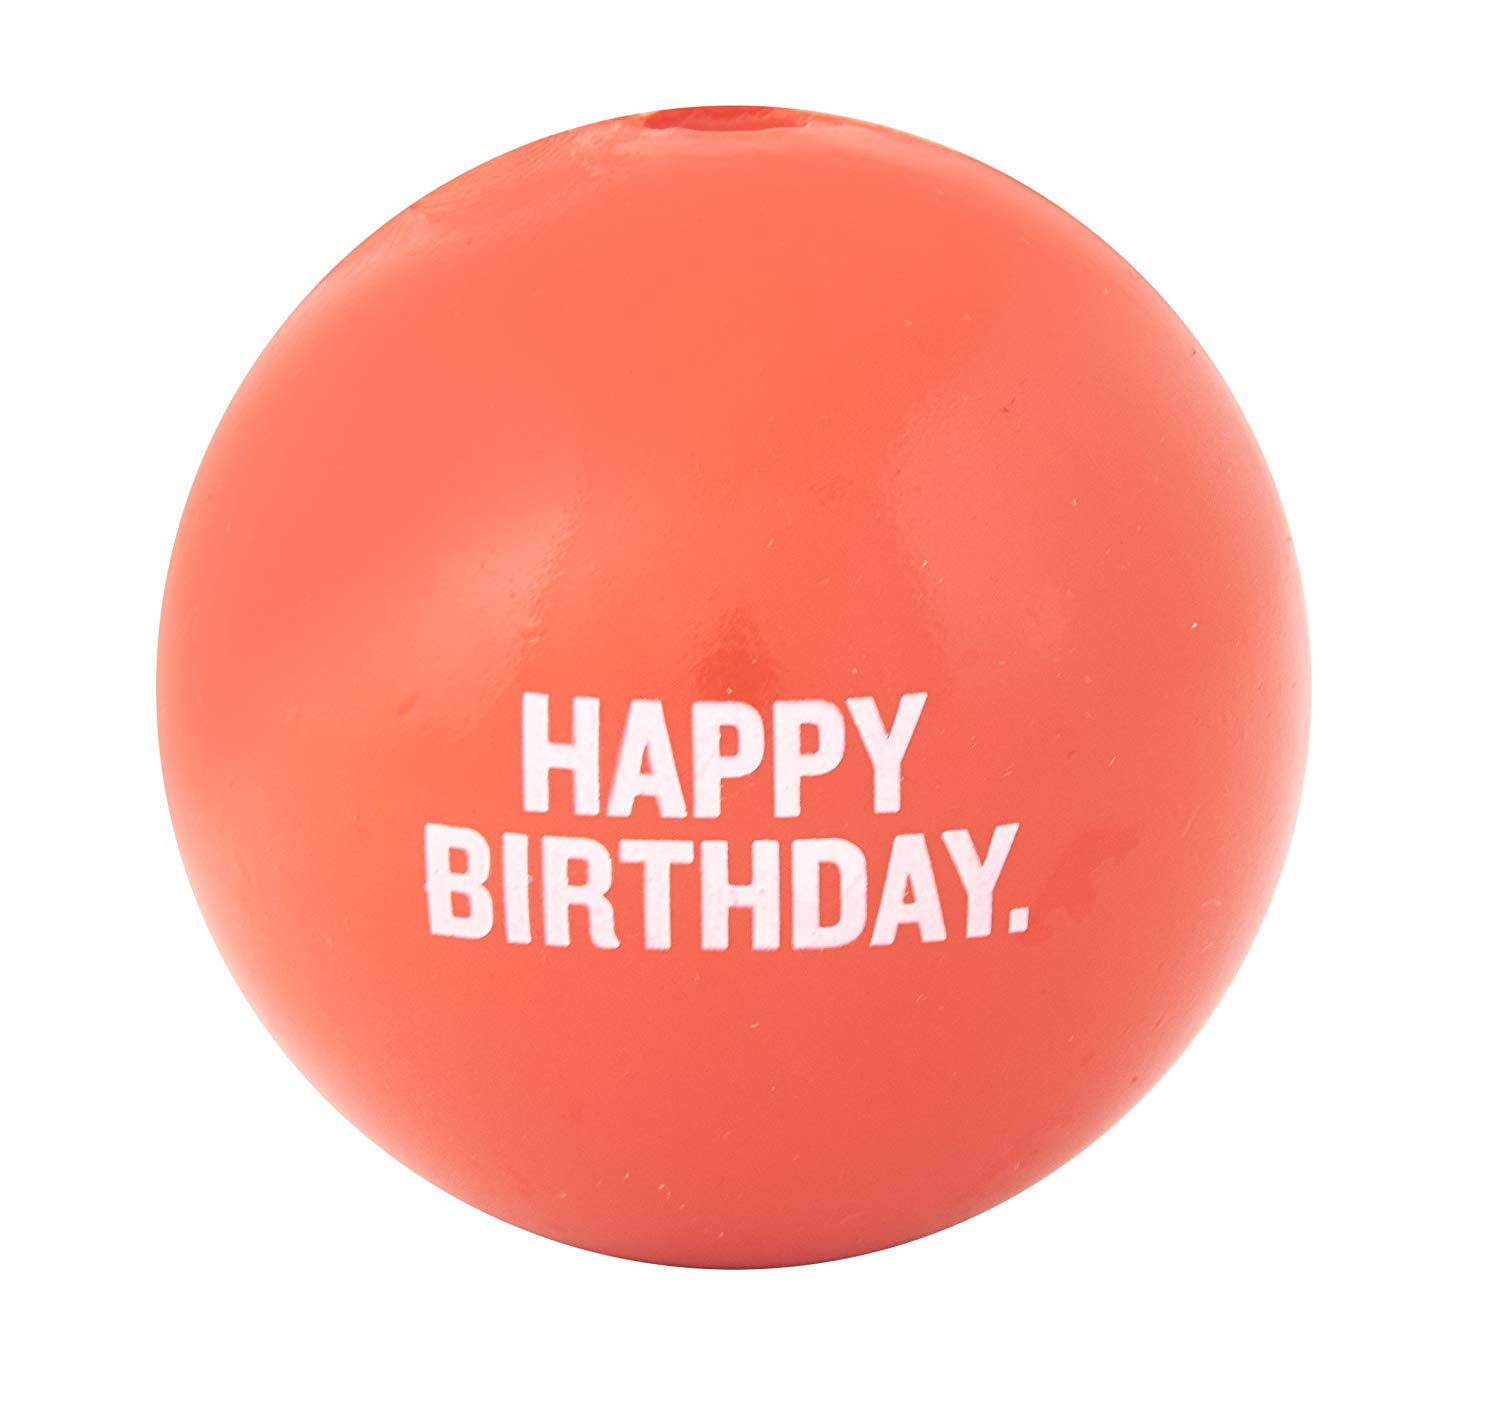 Planet Dog Orbee Tuff Happy Birthday Ball, Tough Gift-Play-Chew Ball